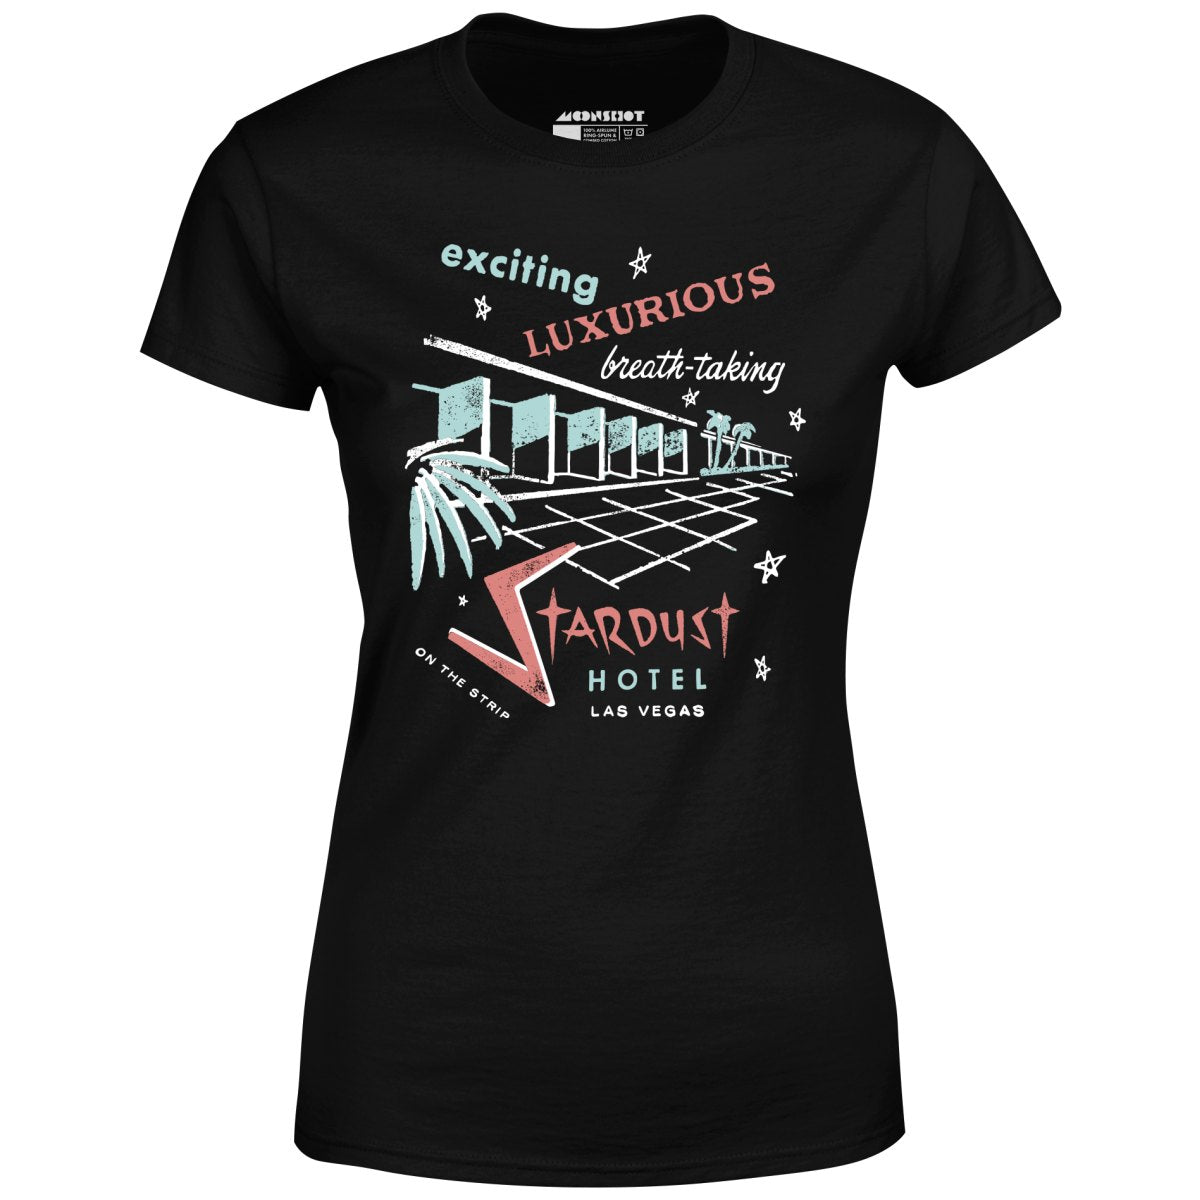 Stardust Hotel - Vintage Las Vegas - Women's T-Shirt